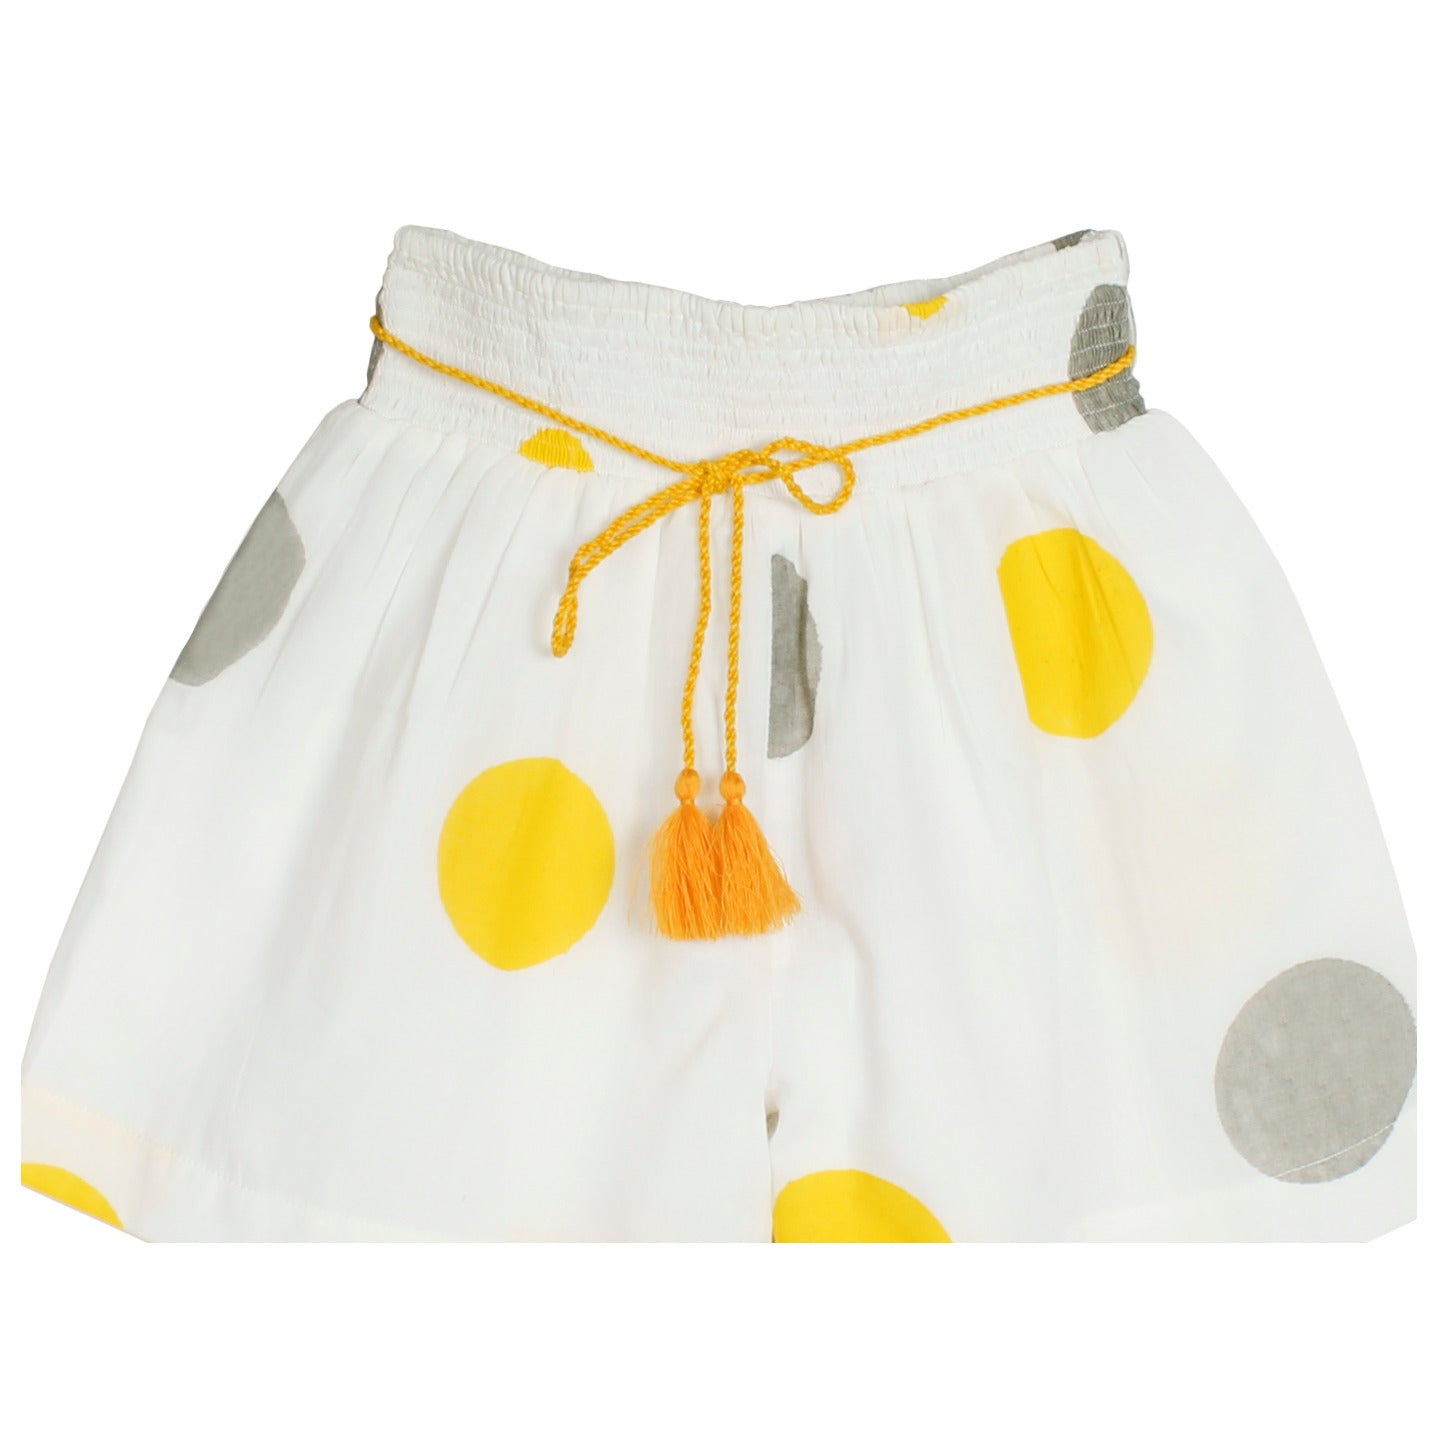 Anika polks shorts yellow/grey